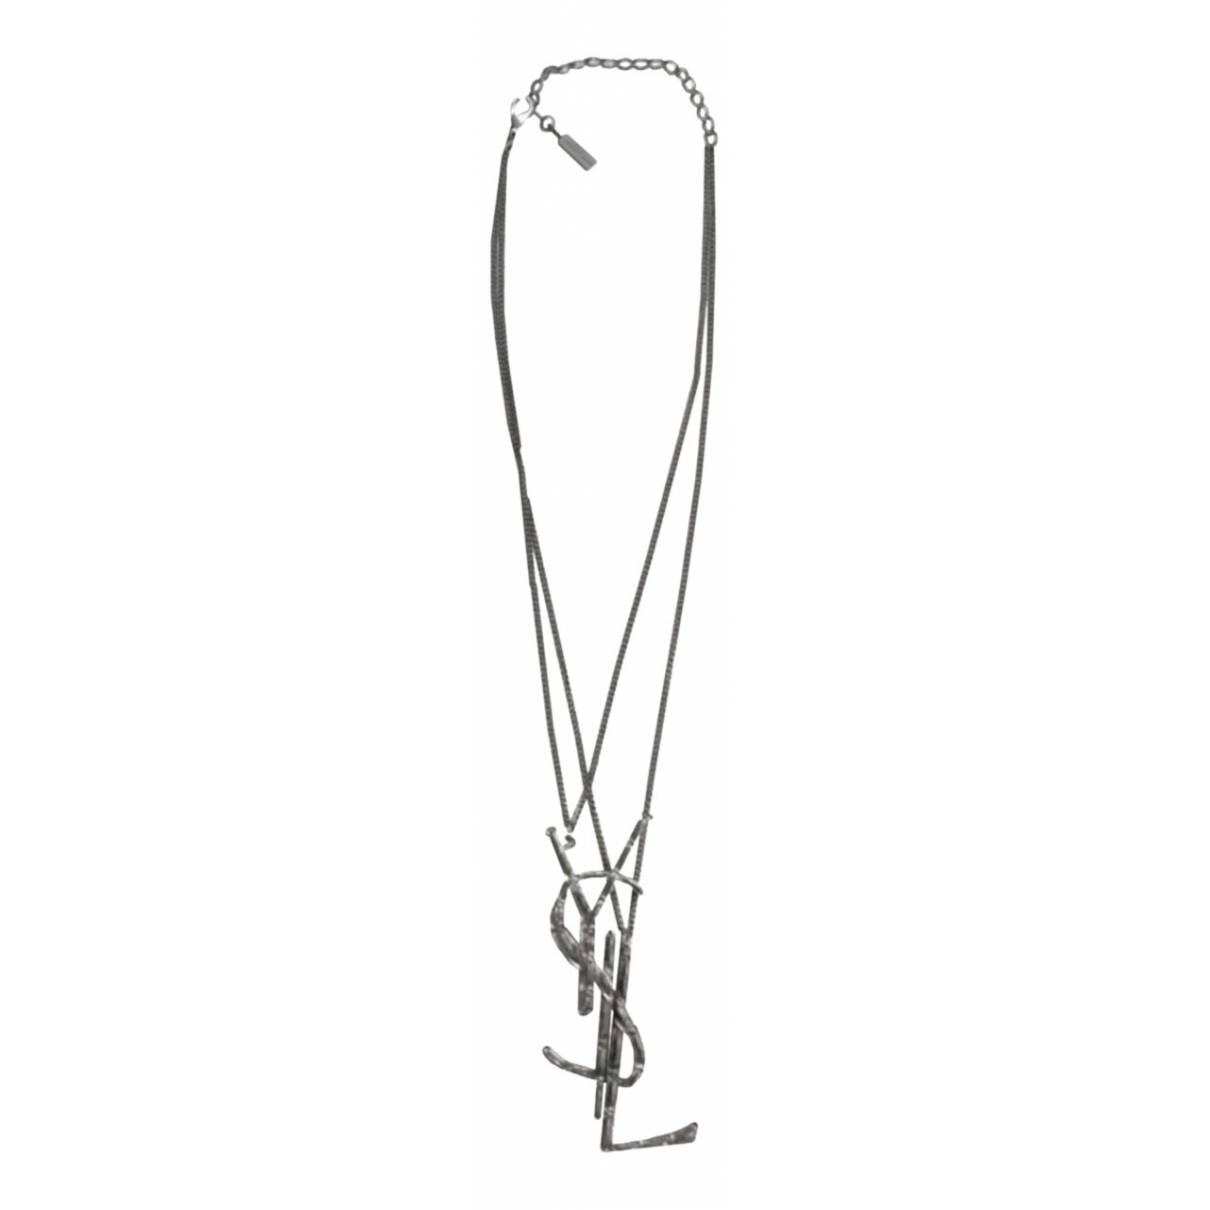 Saint Laurent Monogram Necklace in Metallic